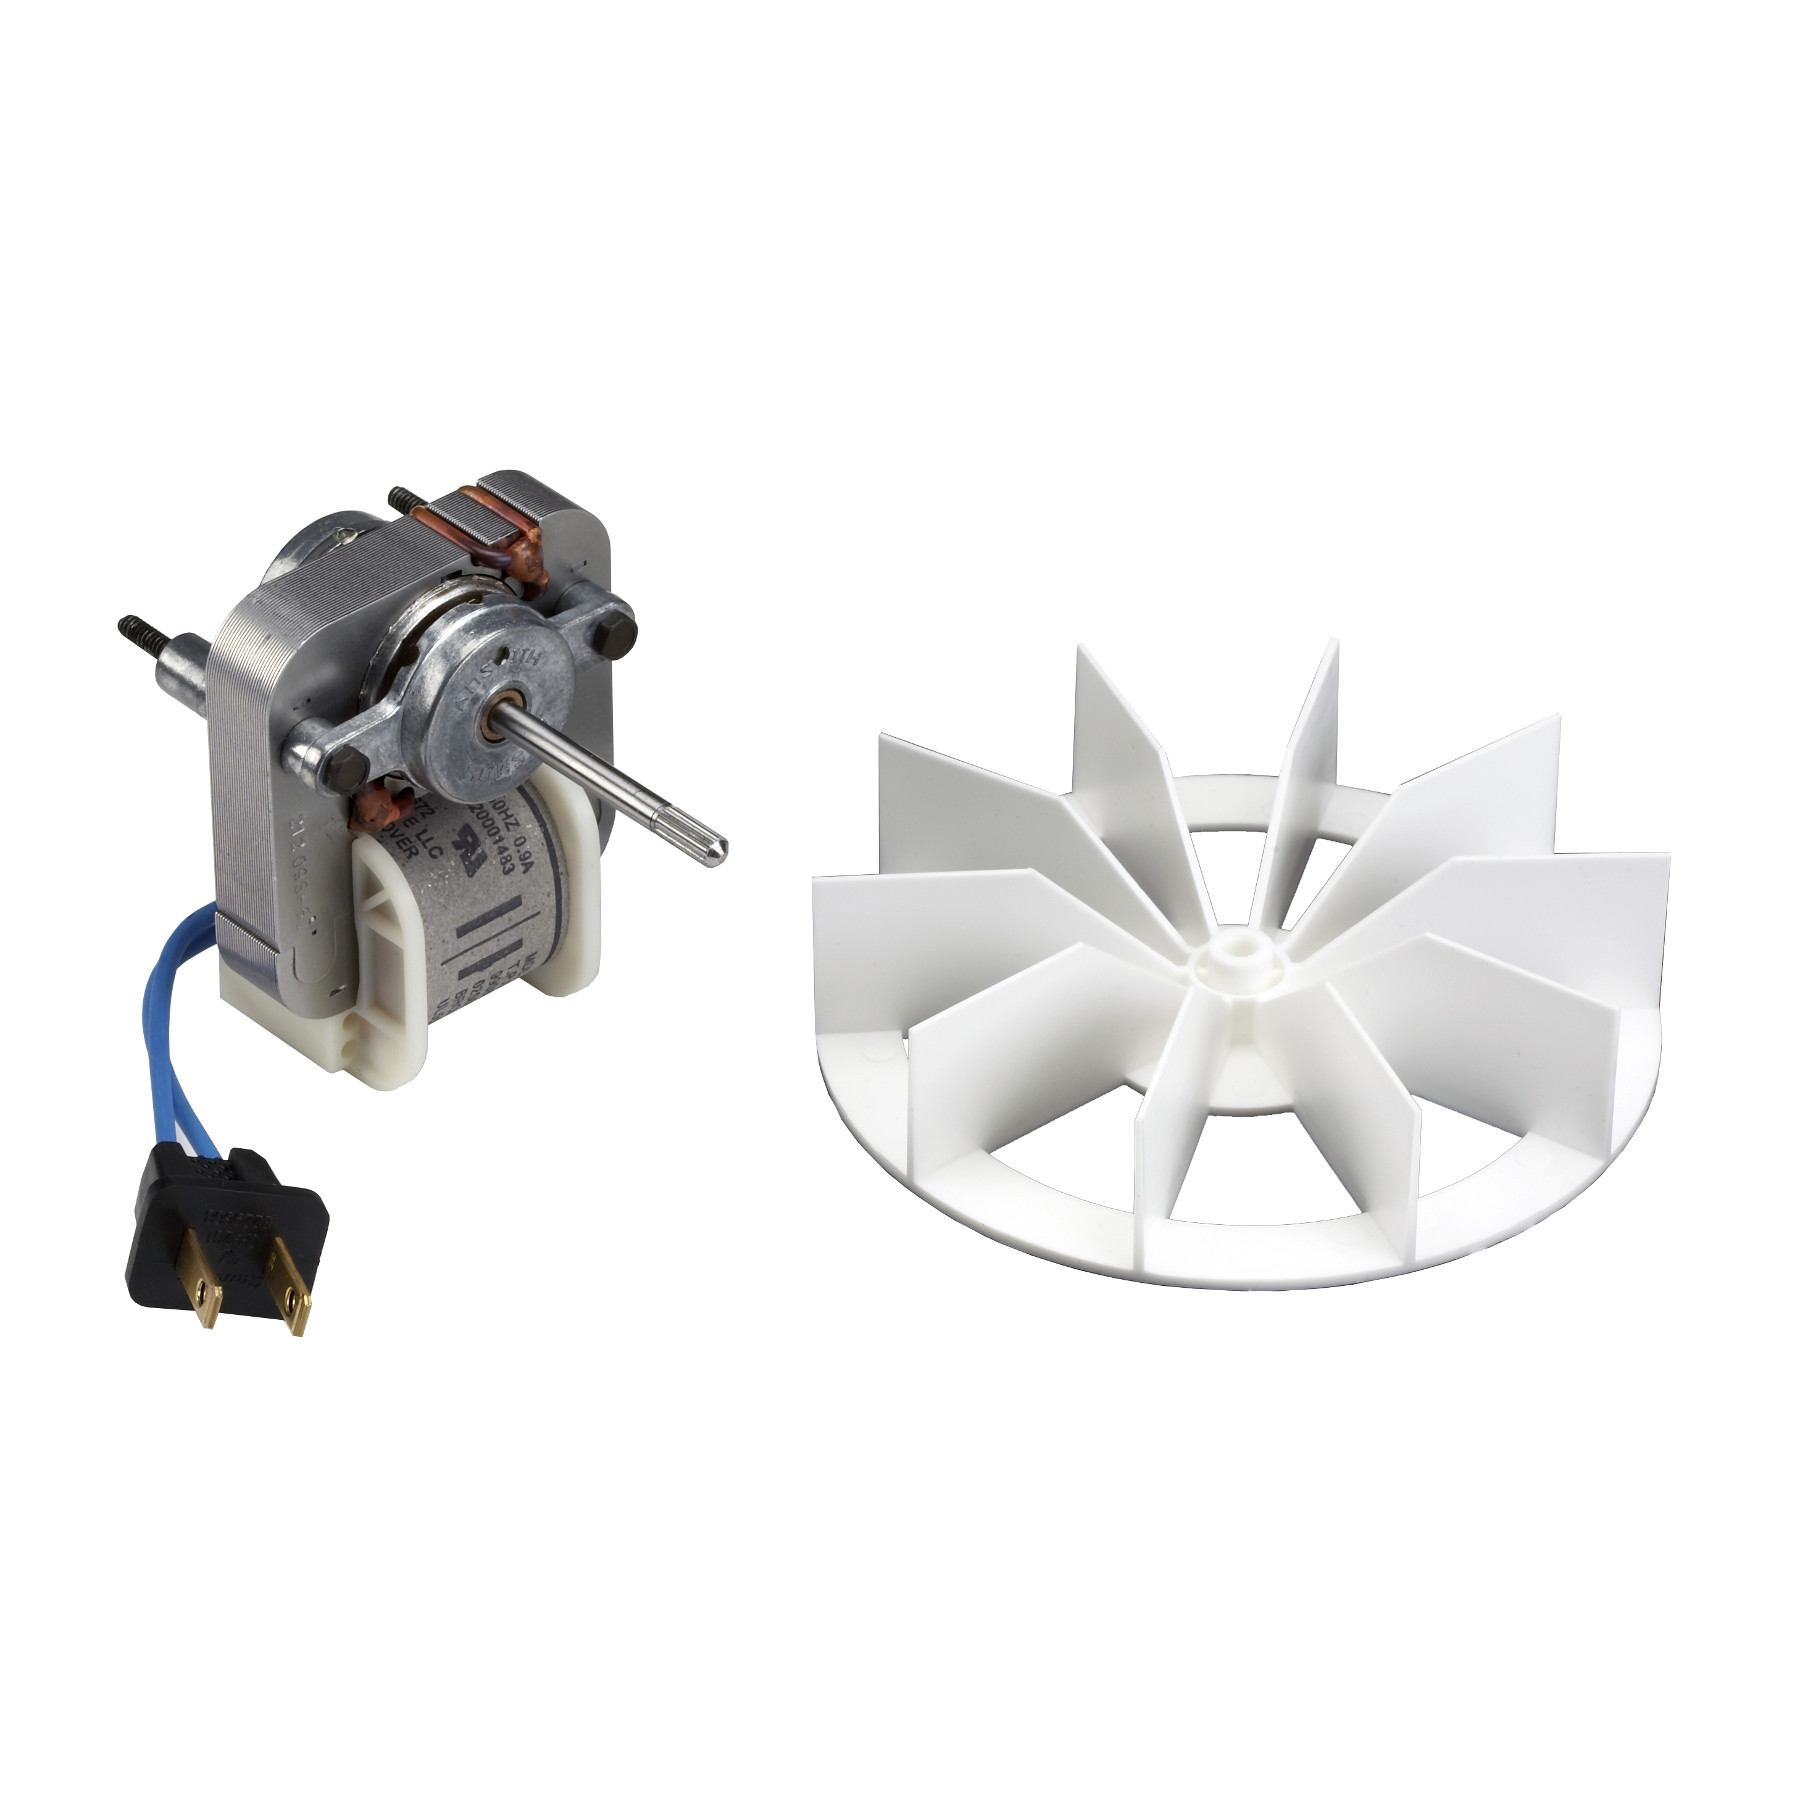 Broan-NuTone® Genuine Replacement Motor/Wheel for 50 CFM Bathroom Fans, 4.0 Sones, Fits Select Models